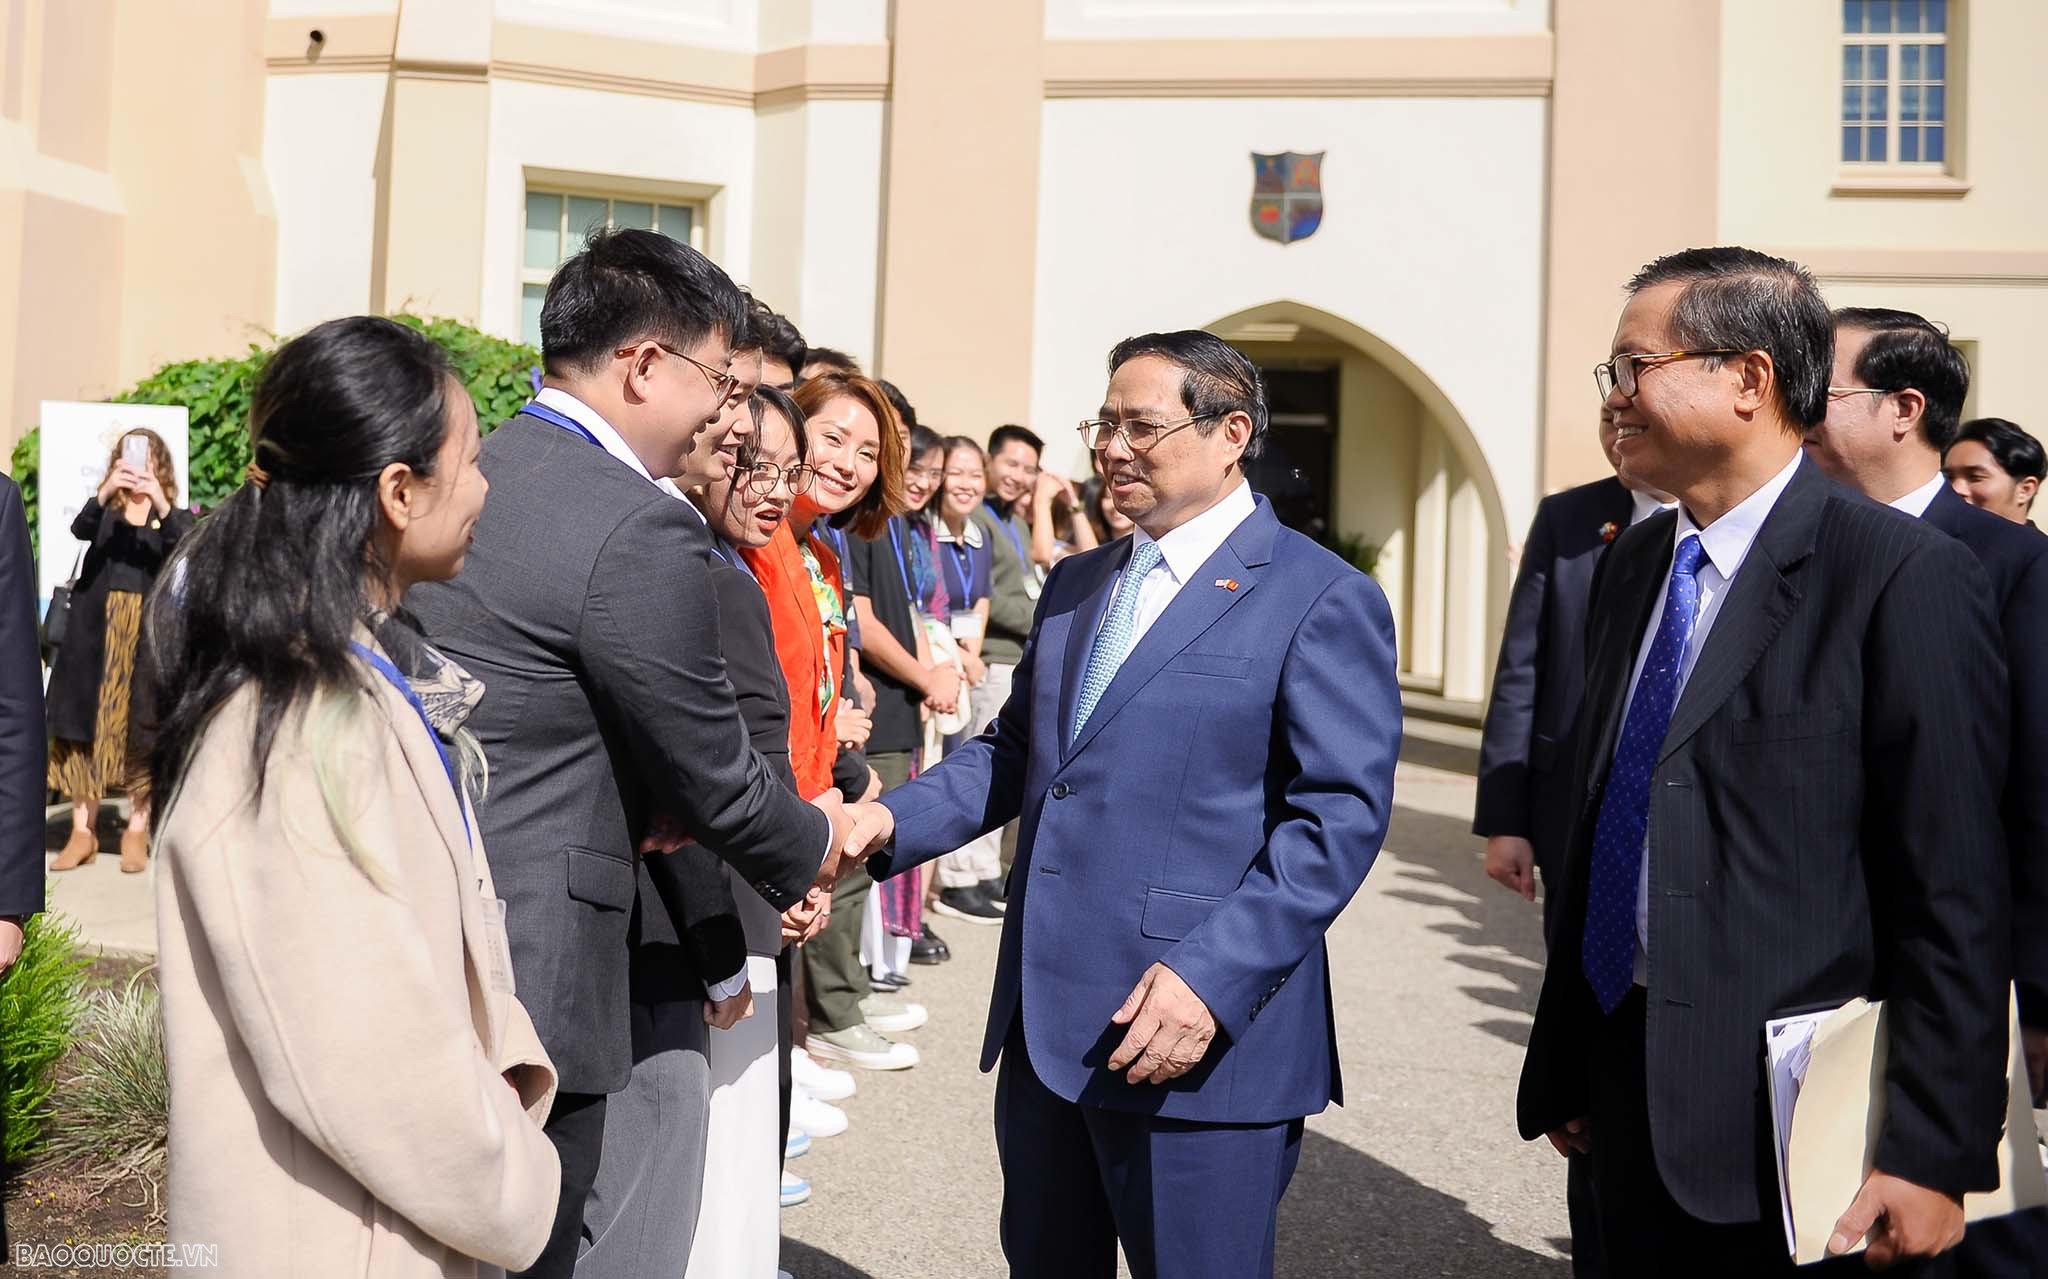 Prime Minister Pham Minh Chinh visits University of San Francisco